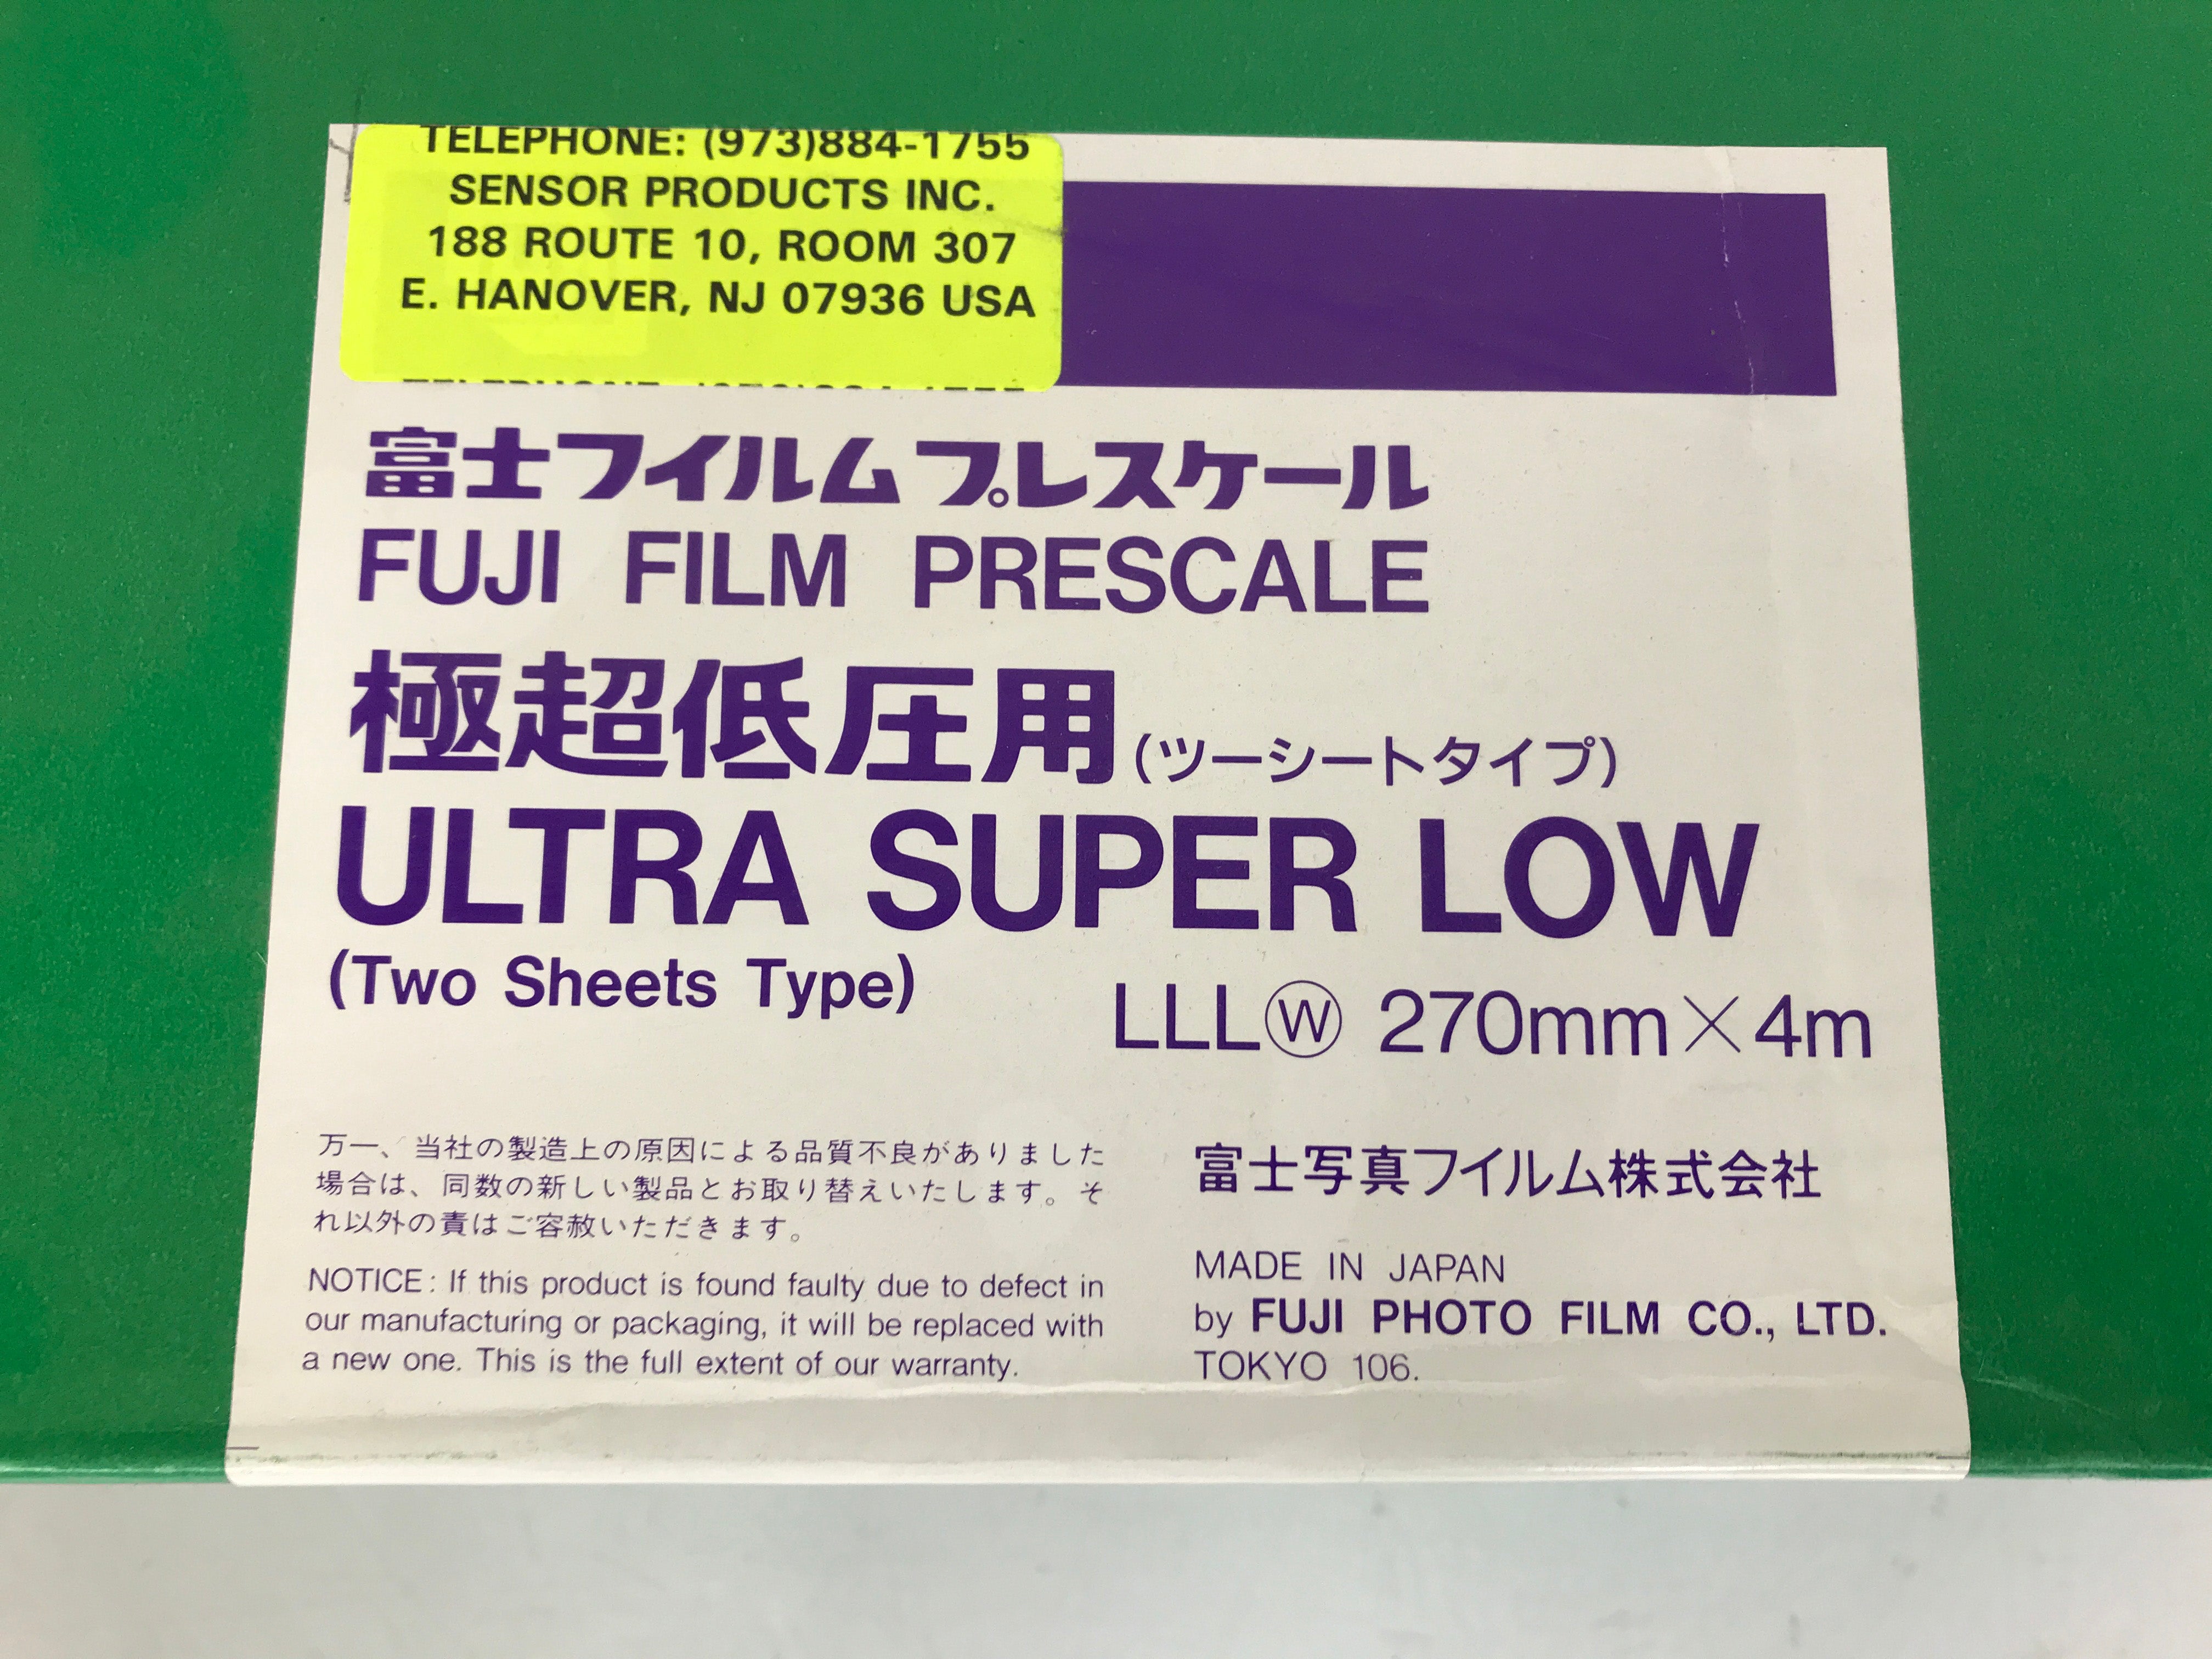 Expired Fuji Film Prescale Ultra Super Low LLLW 270mm x 4m #2